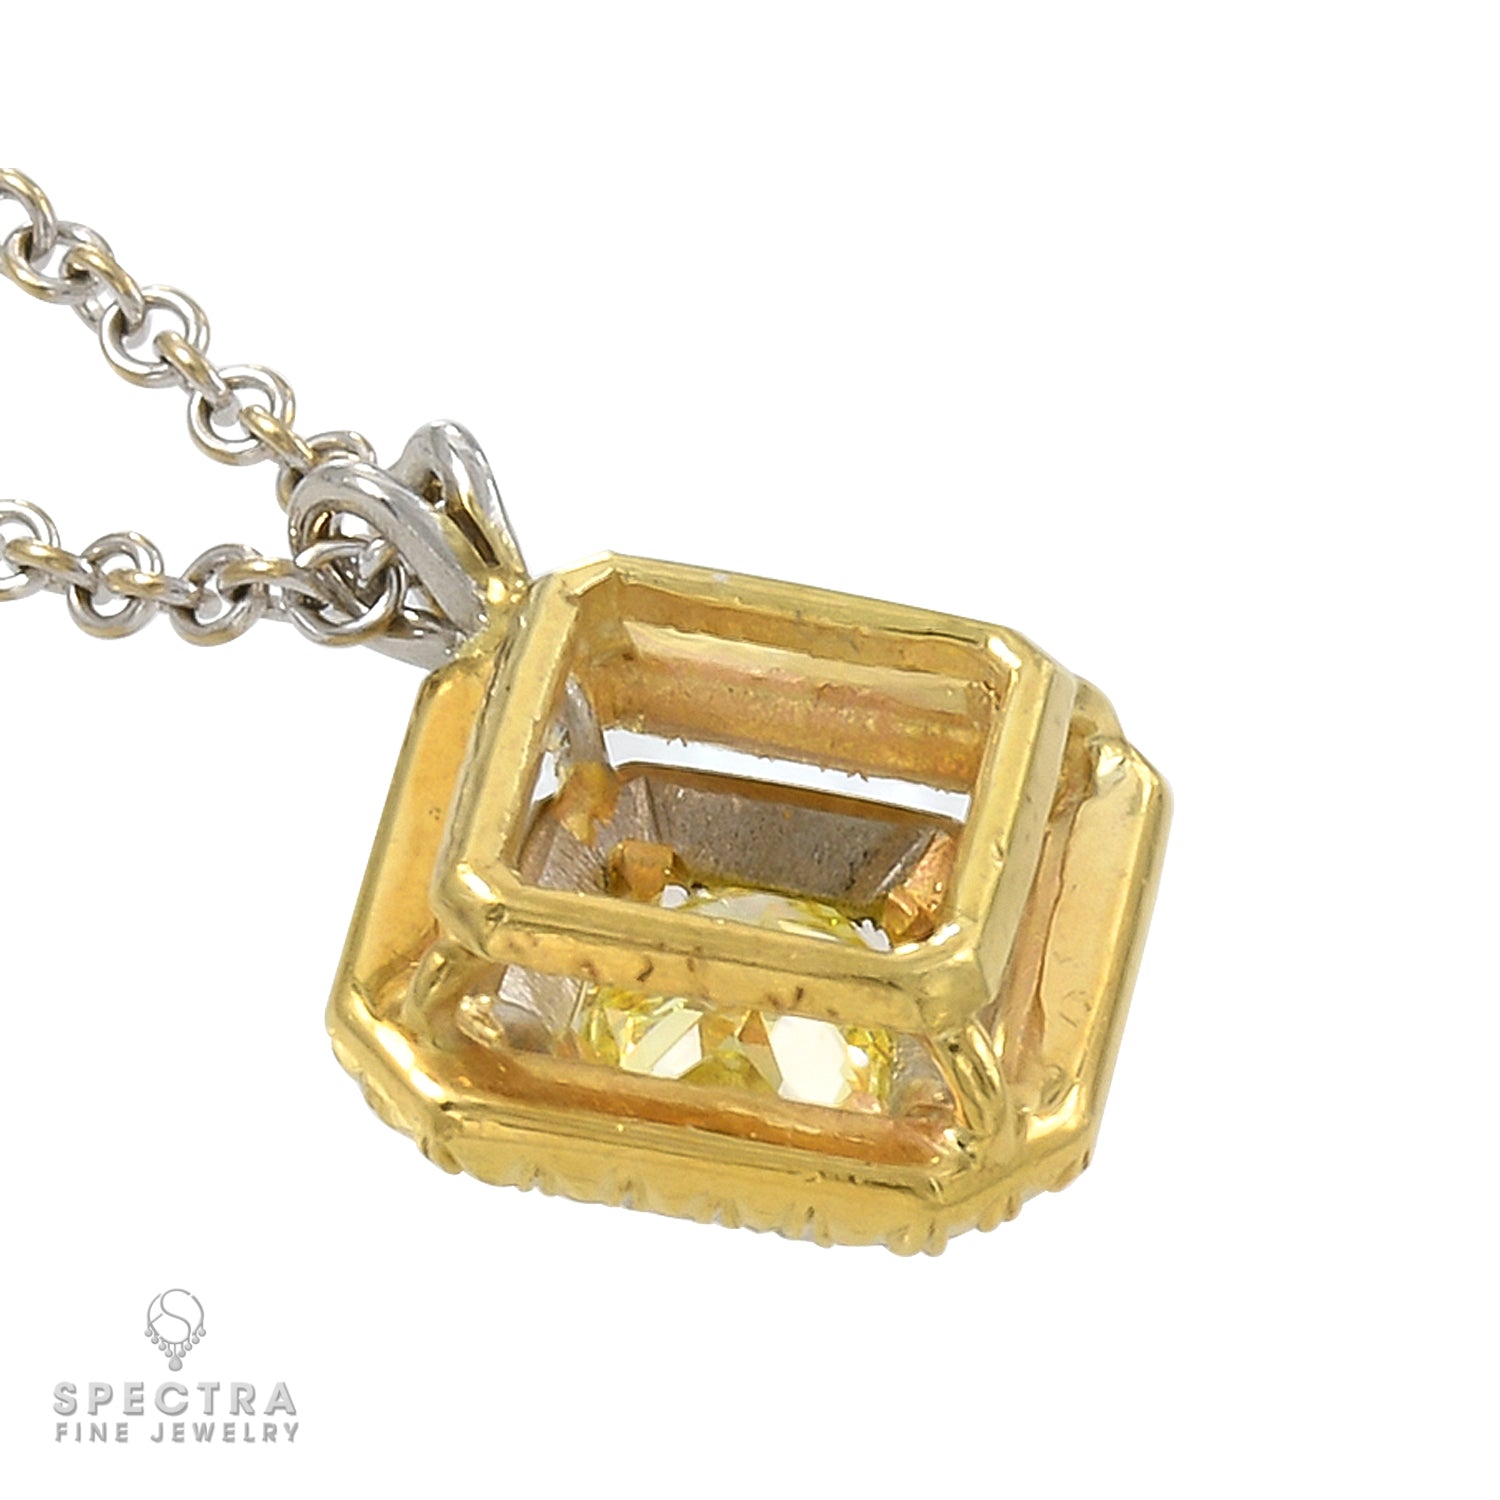 Elegant Fancy Yellow Diamond Pendant Necklace by Spectra Fine Jewelry - GIA Certified, 18kt Gold